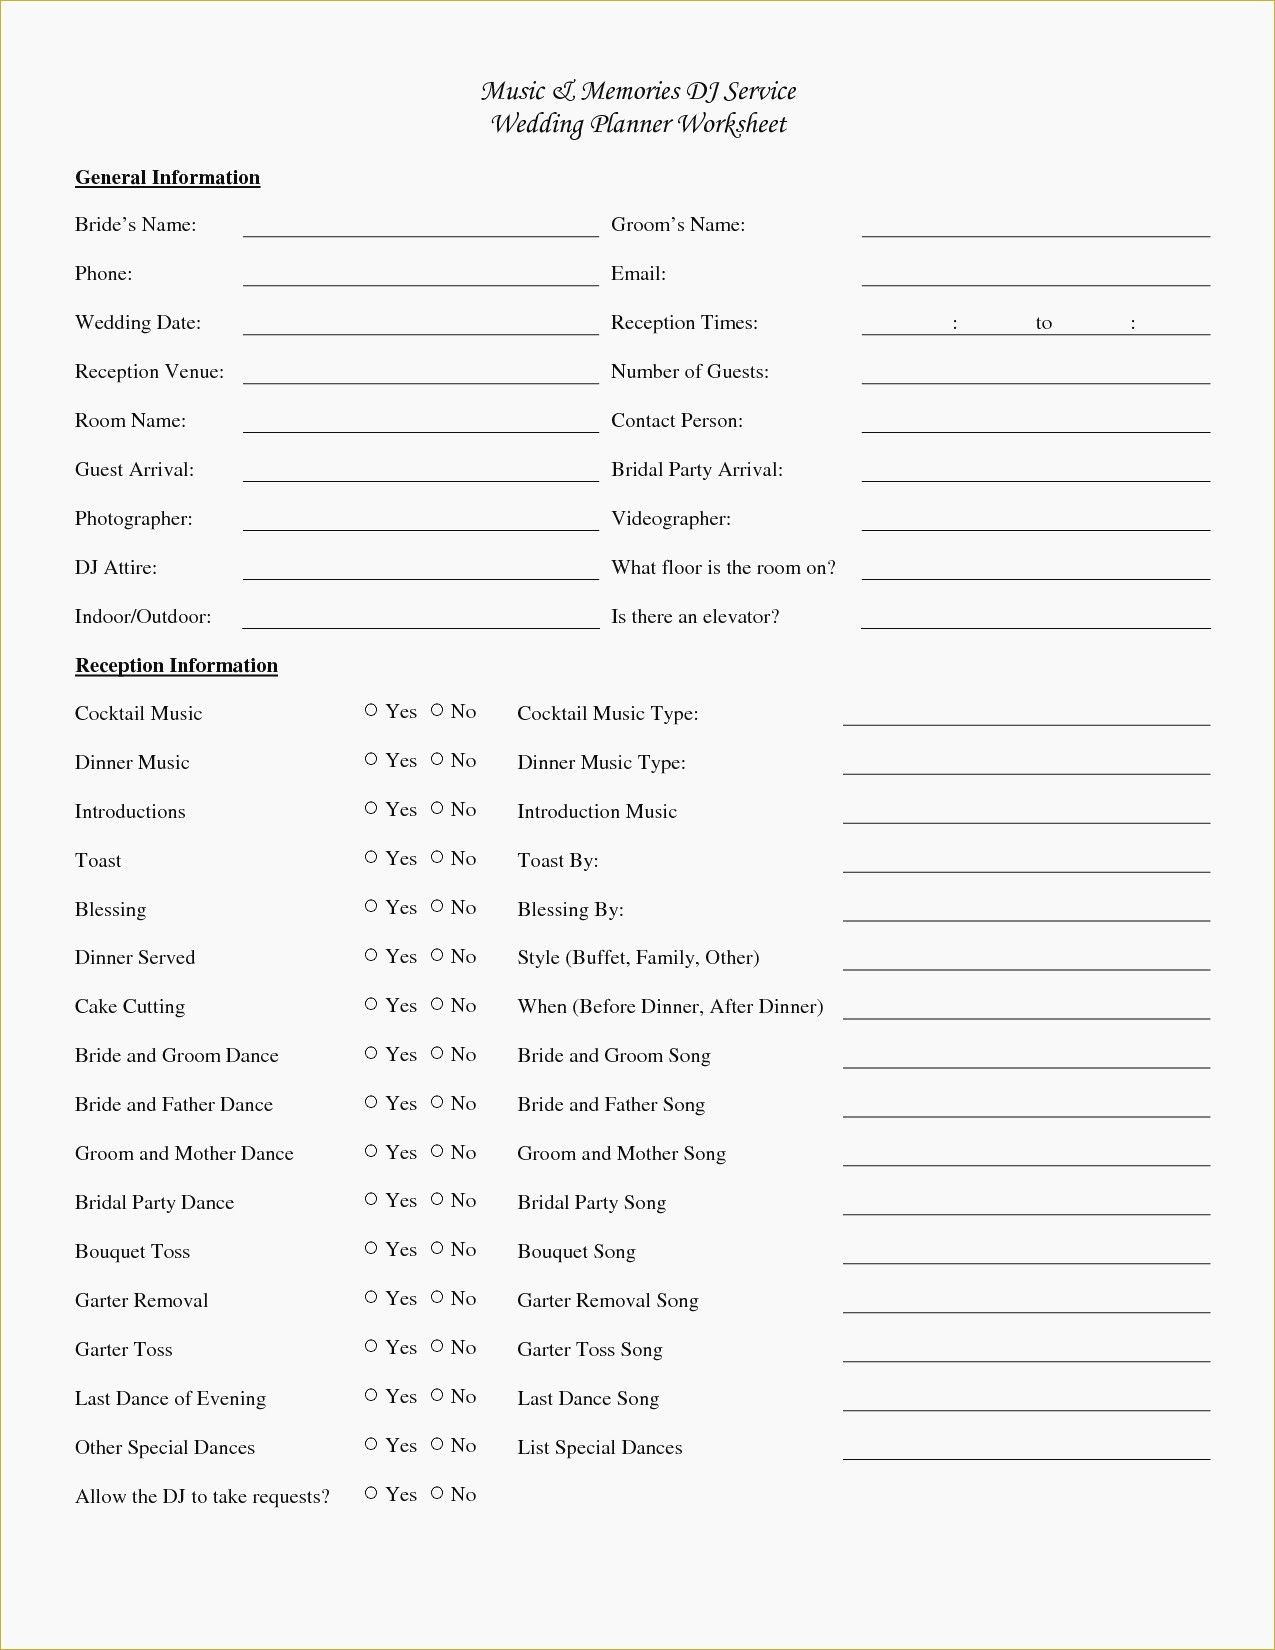 Wedding Planning Spreadsheet Or Free Printable Wedding Planner - Free Printable Wedding Planner Workbook